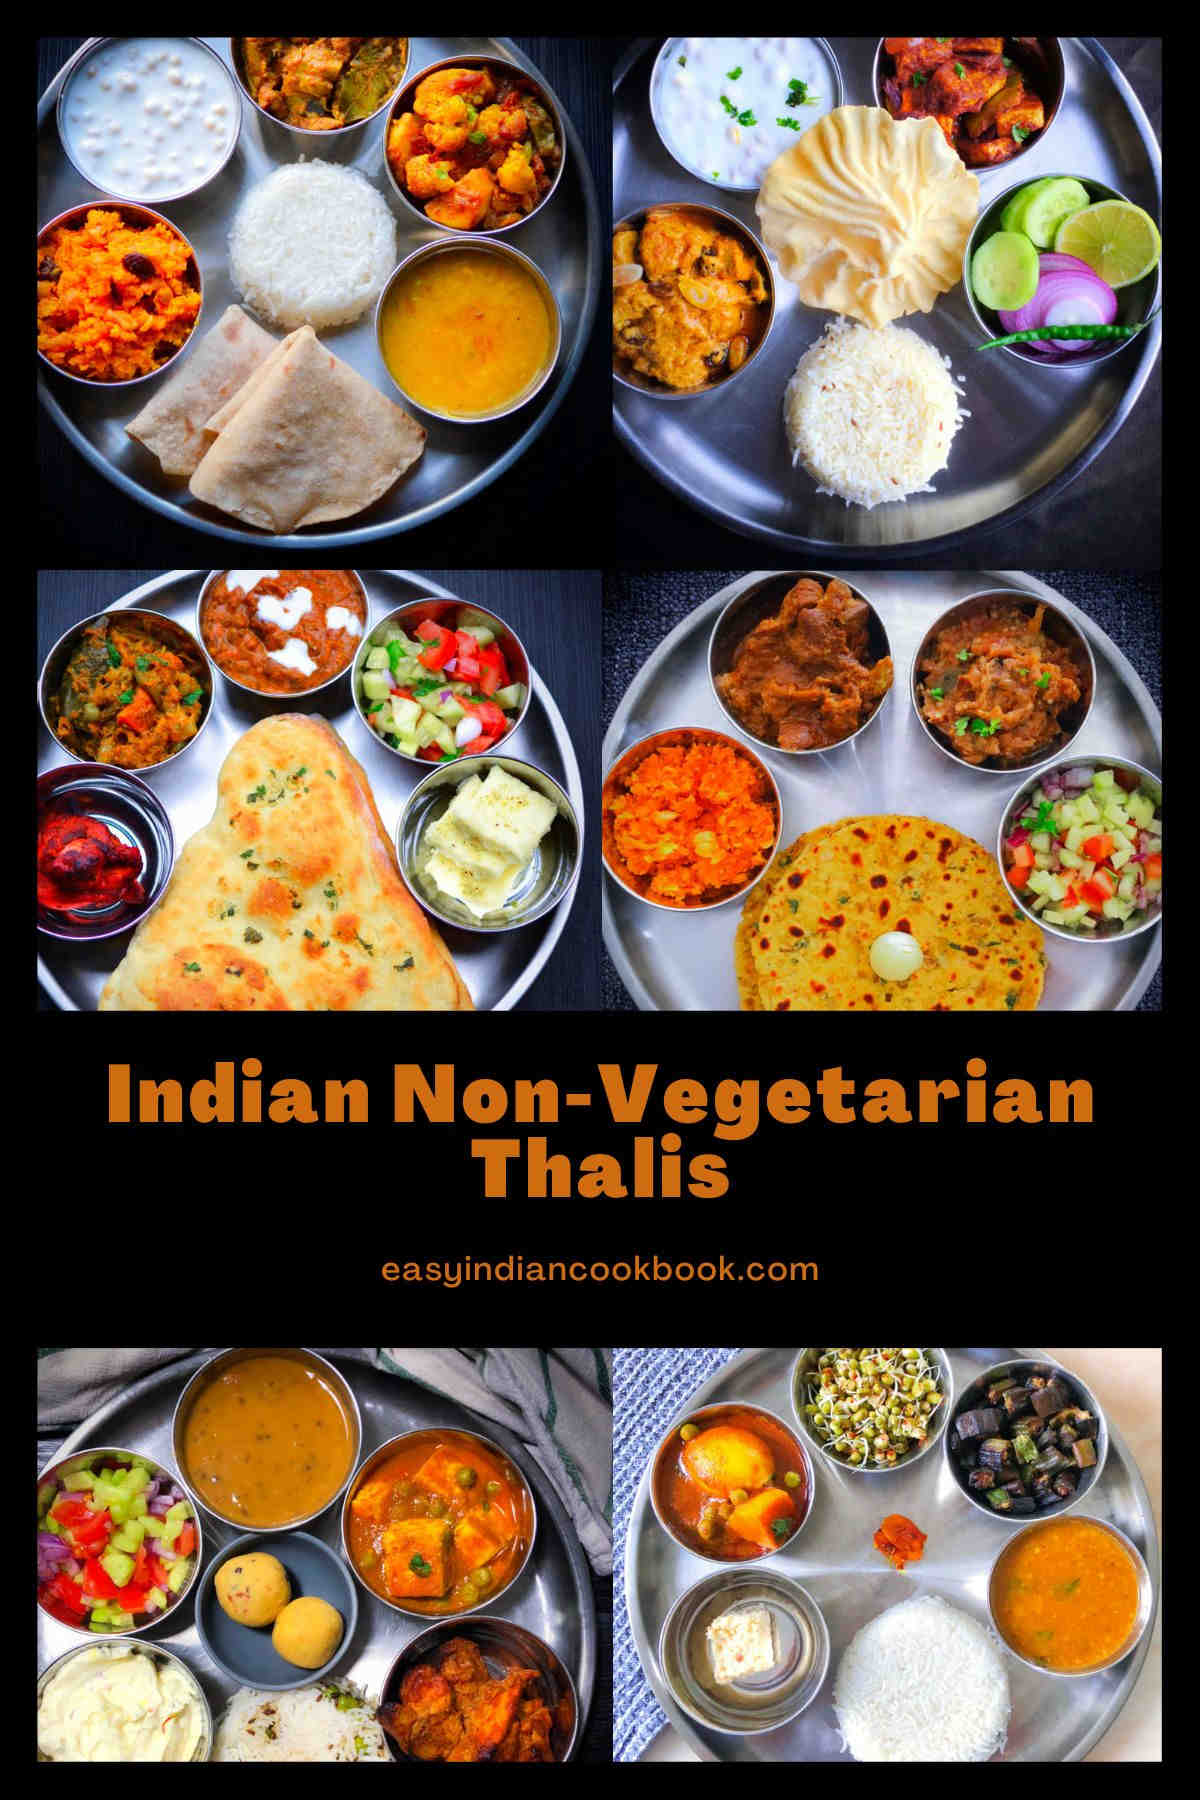 Indian non-vegetarian thali collection.